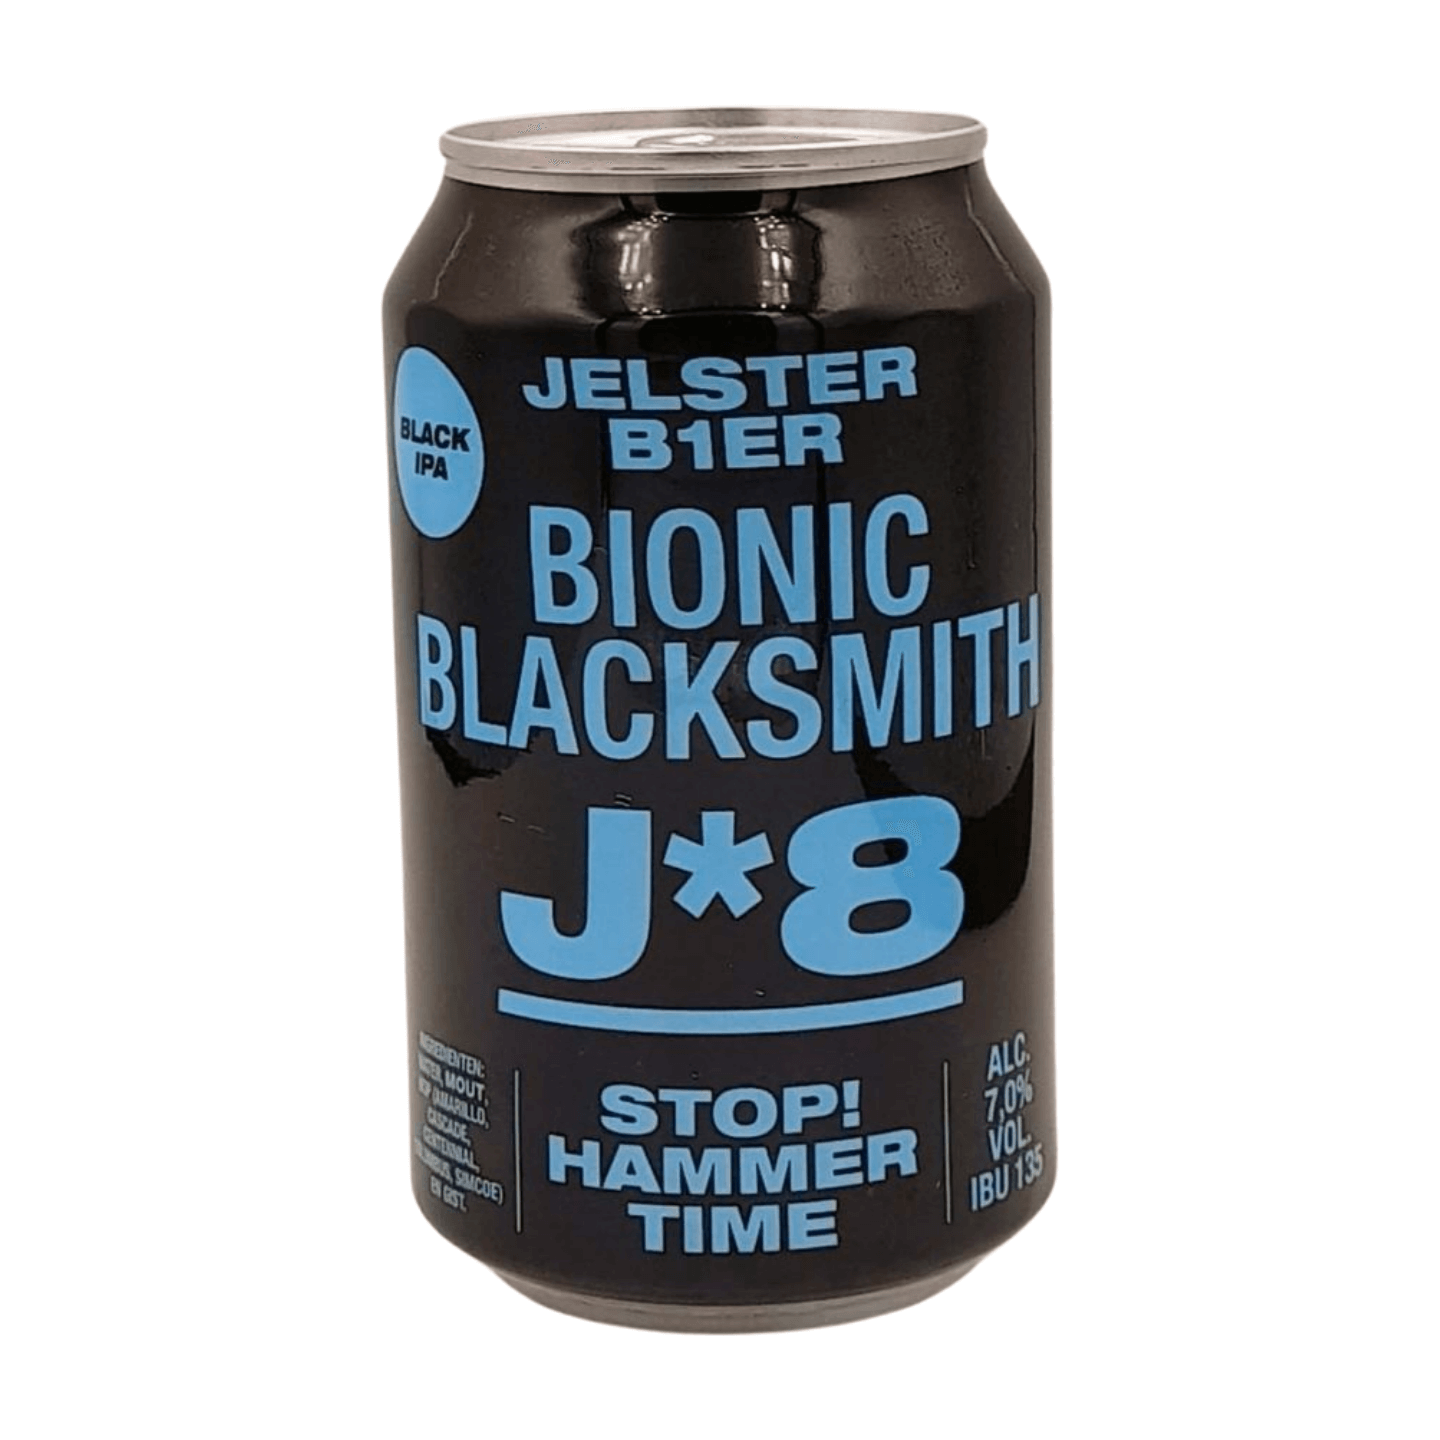 Jelster Bionic Blacksmith | Black IPA Webshop Online Verdins Bierwinkel Rotterdam